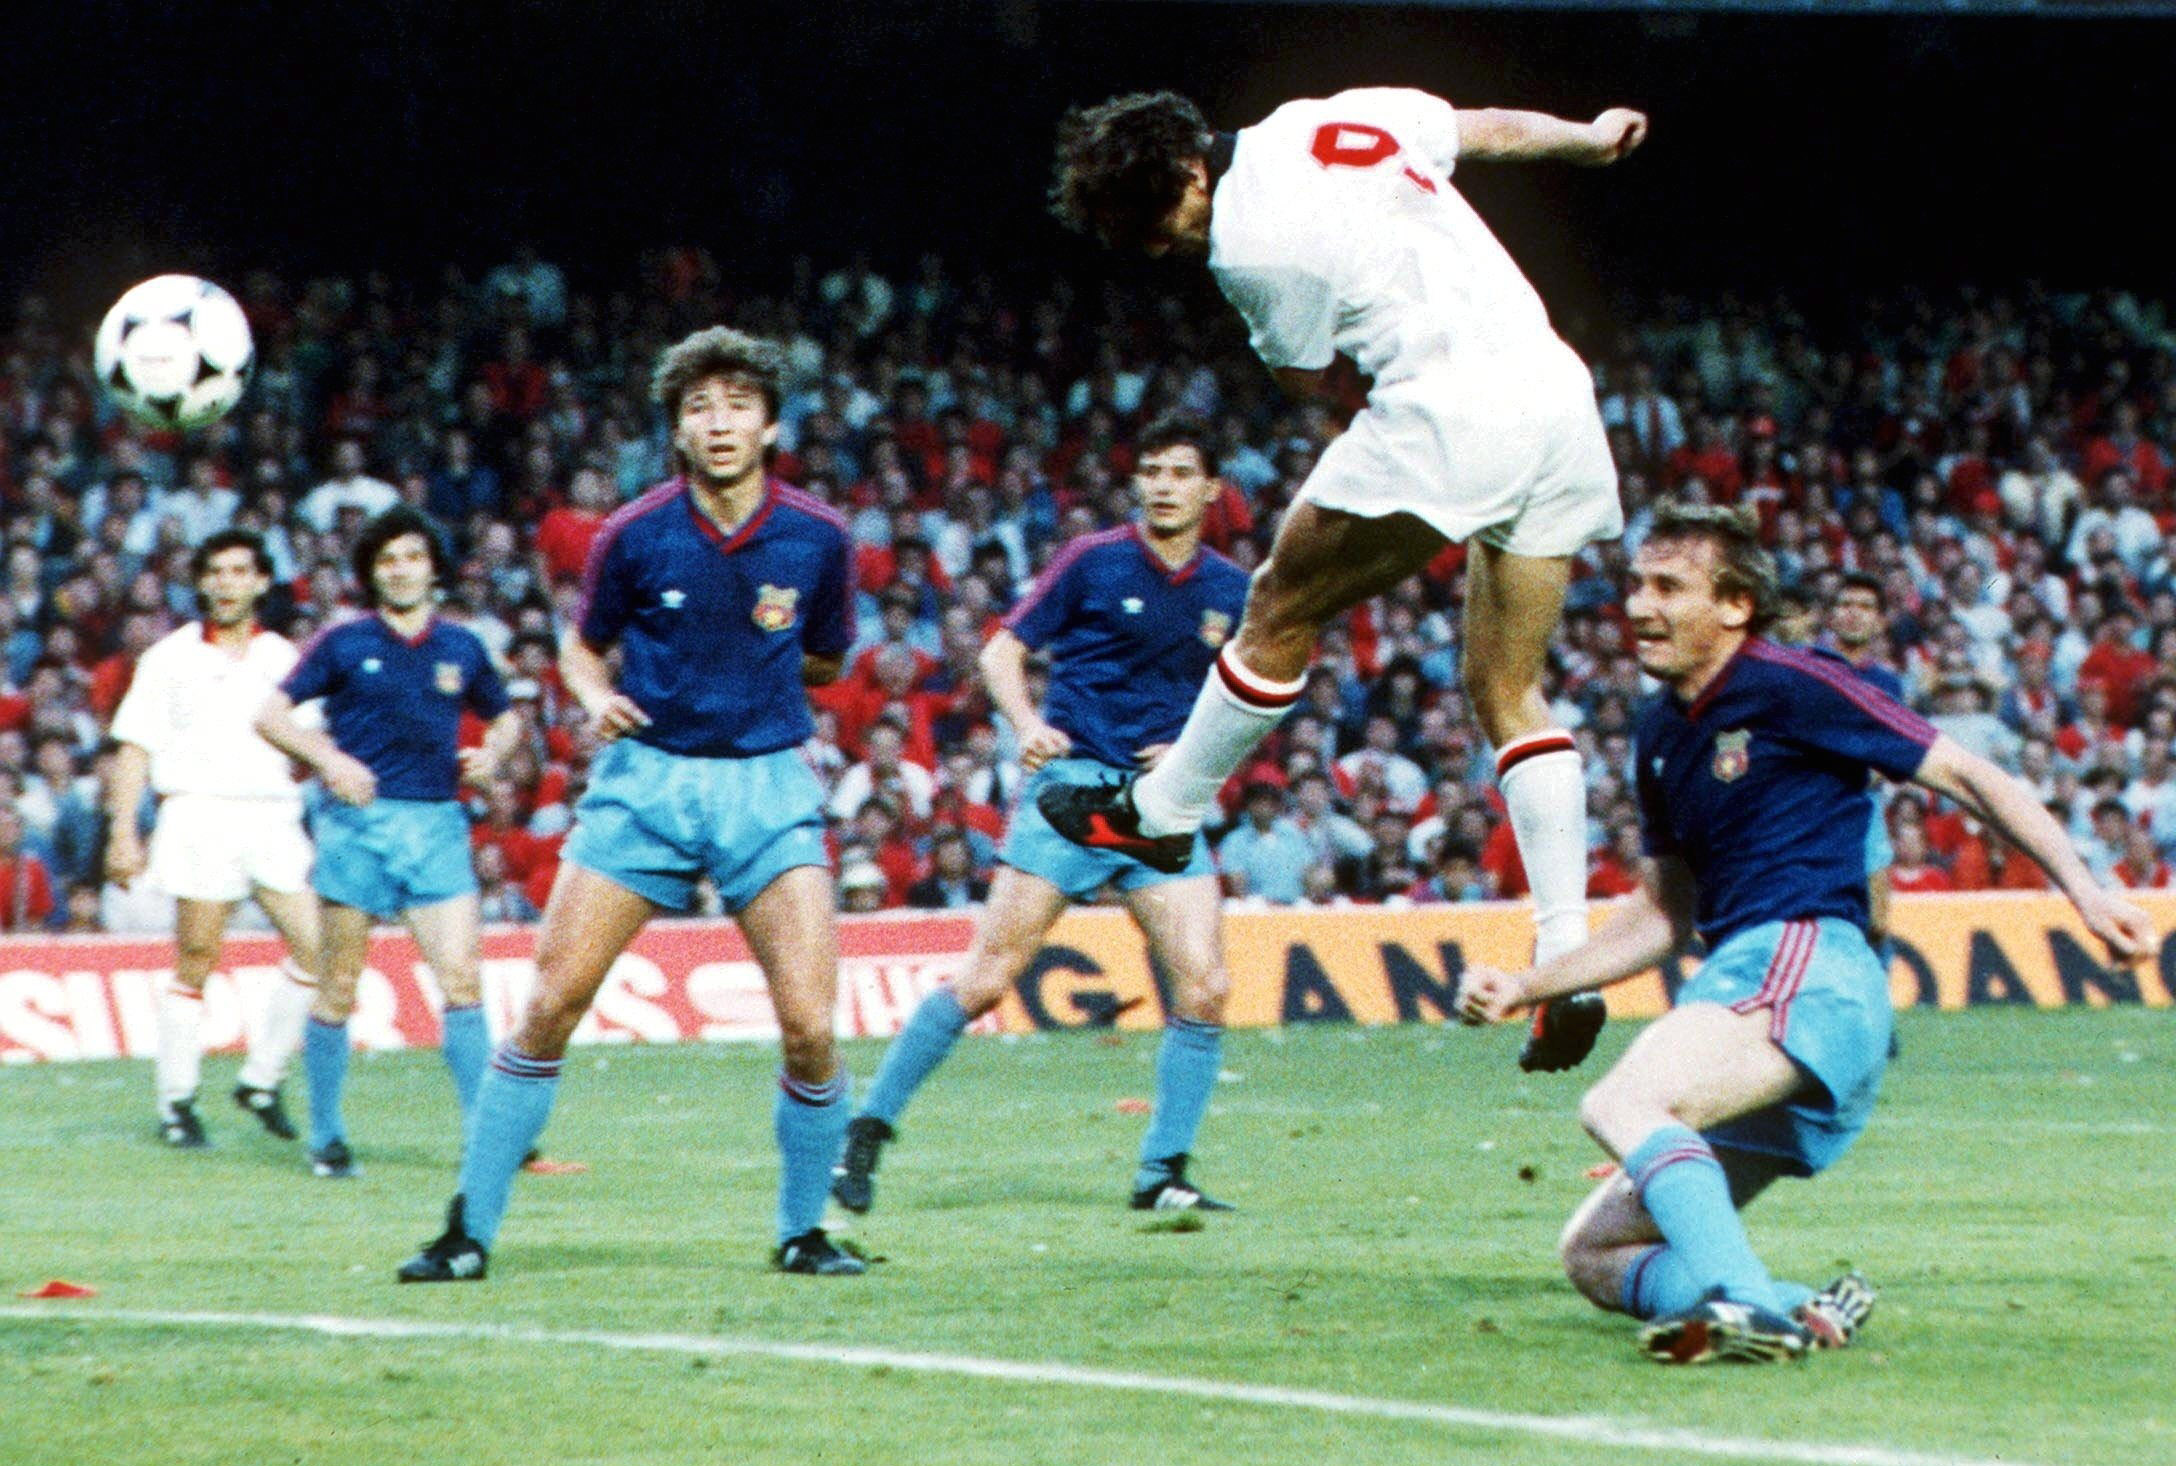 AC Milan 4 - 0 Steaua Bucharest, Champions League Final '89